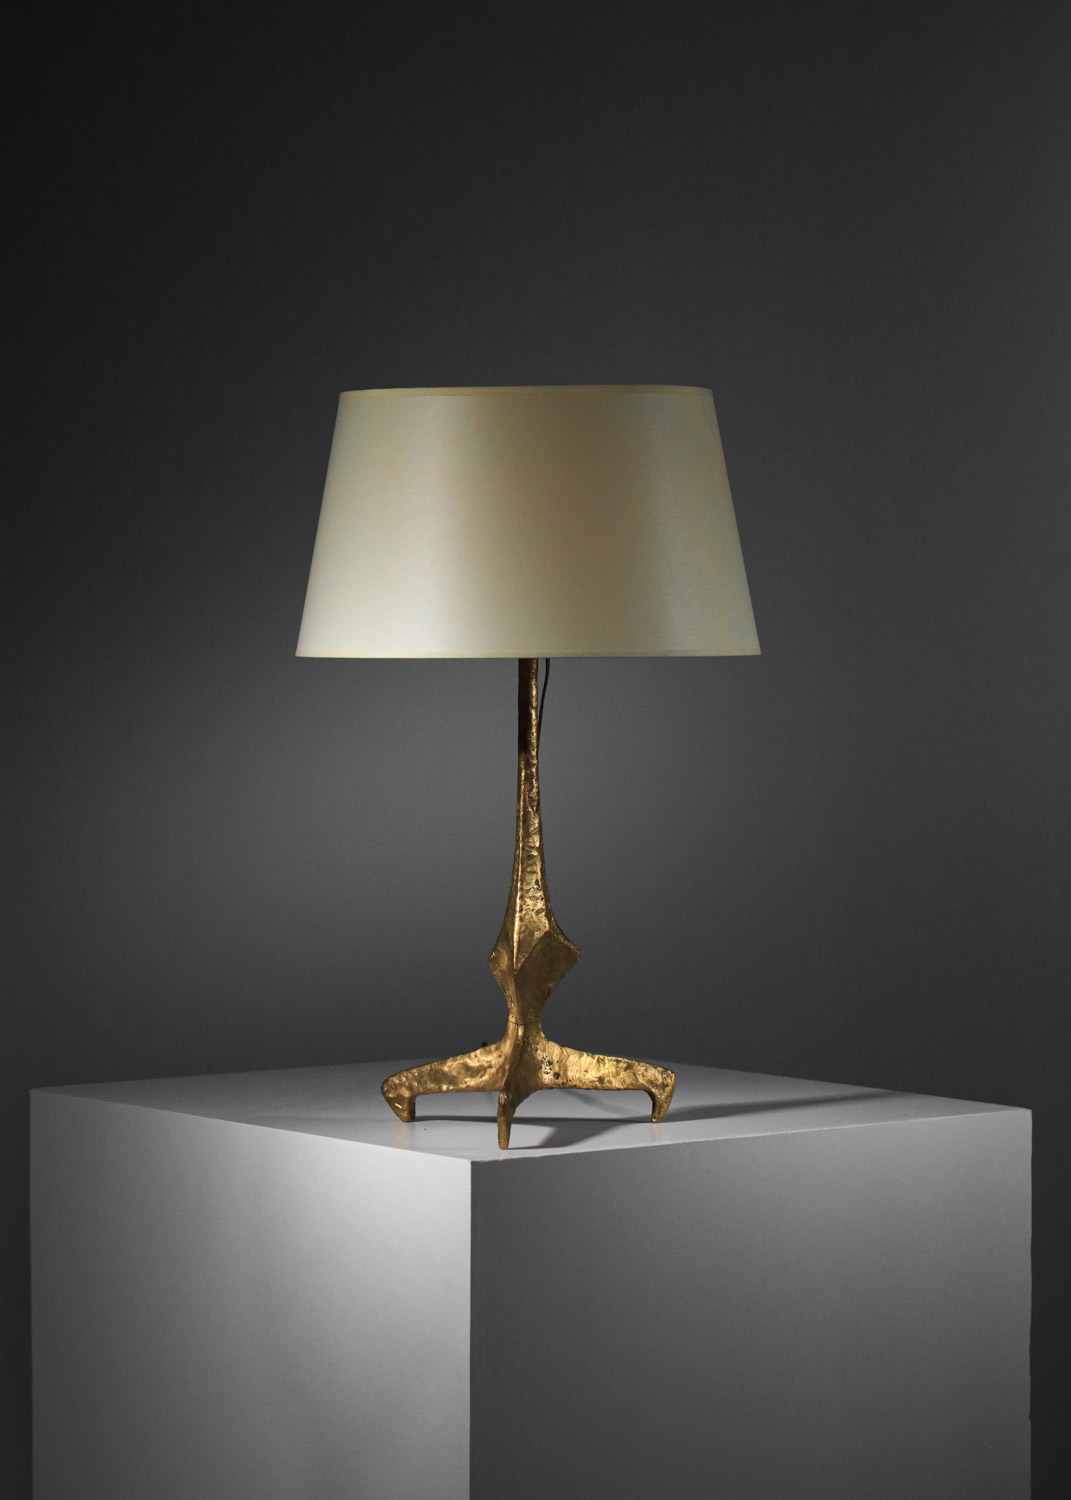 Lampe de table silhouette cheval bronze Dorado : Luminaires